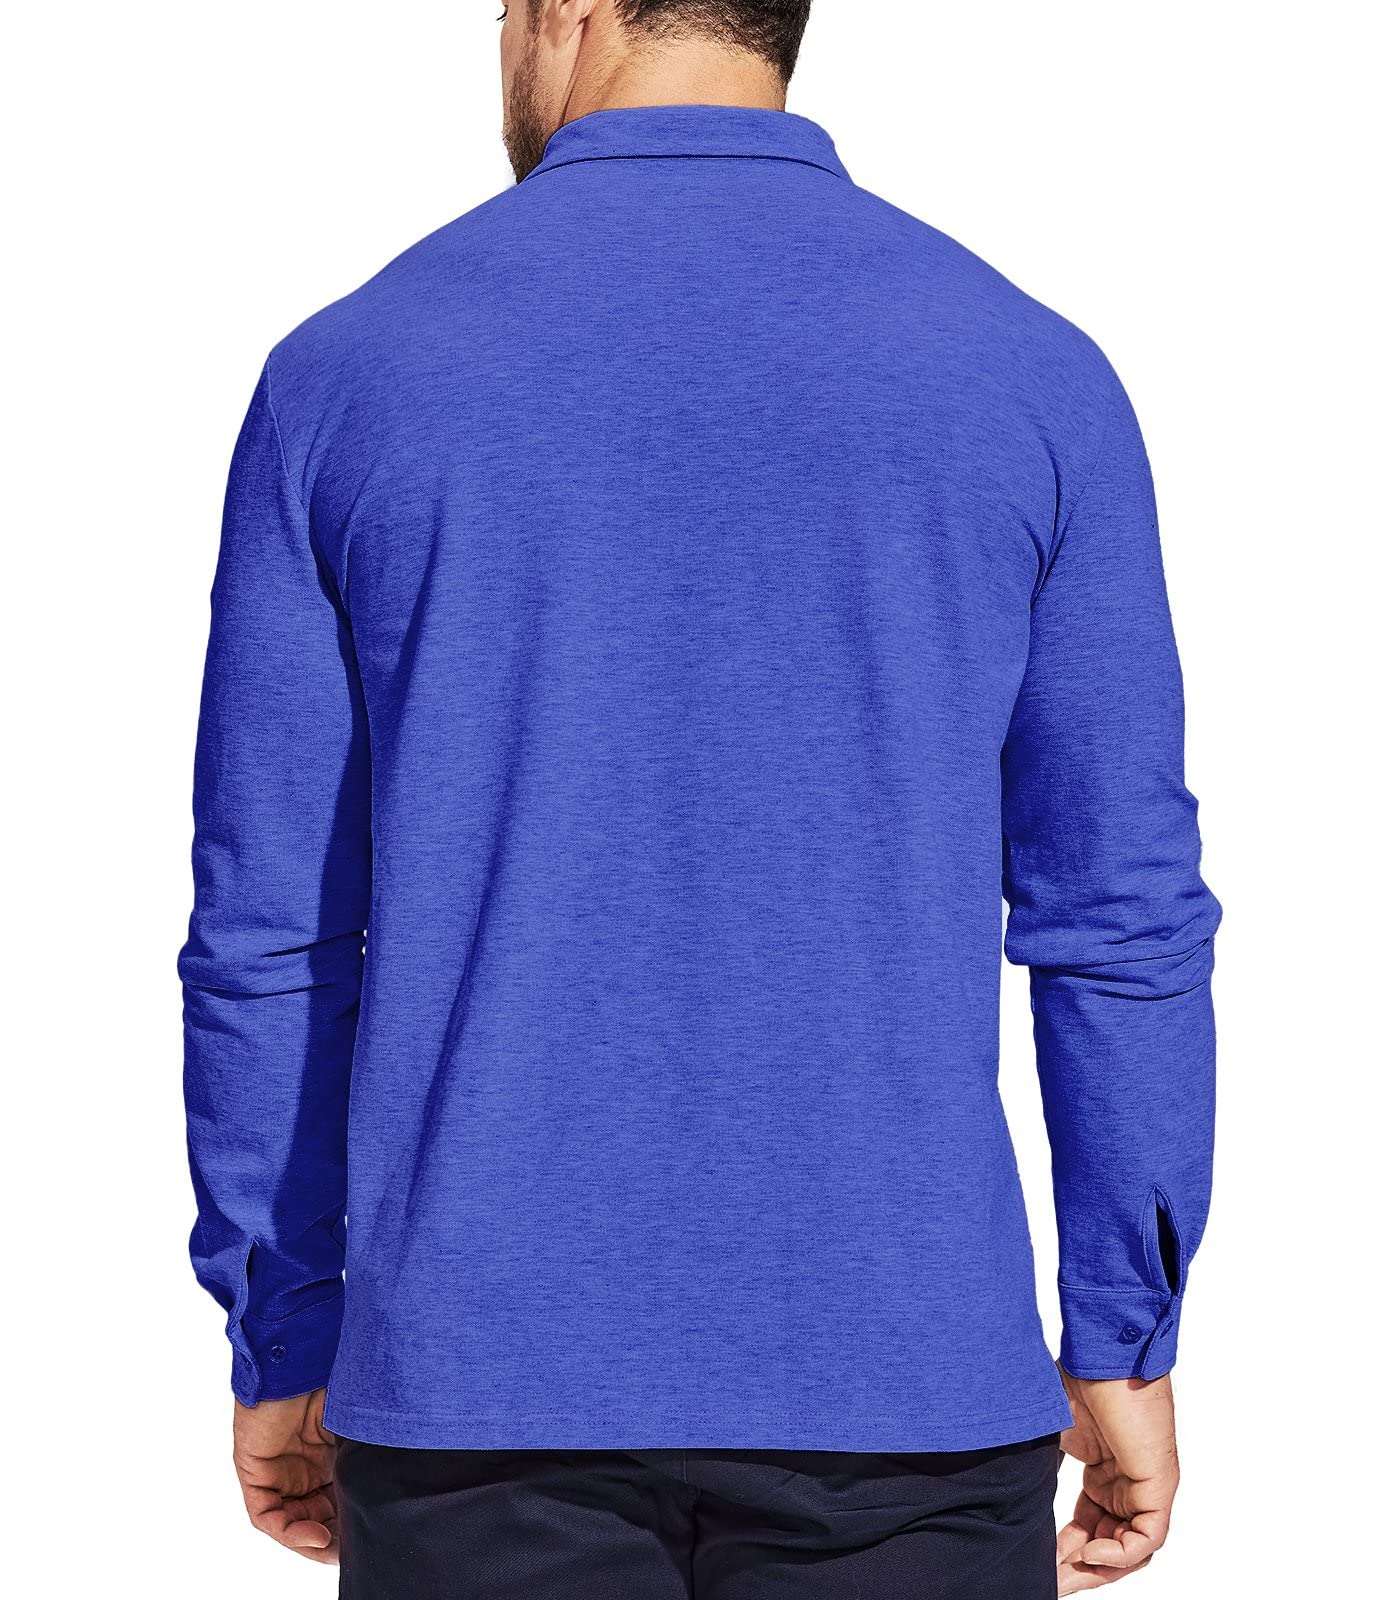 Men Cotton Polo Shirts Long Sleeve Golf Casual Shirt